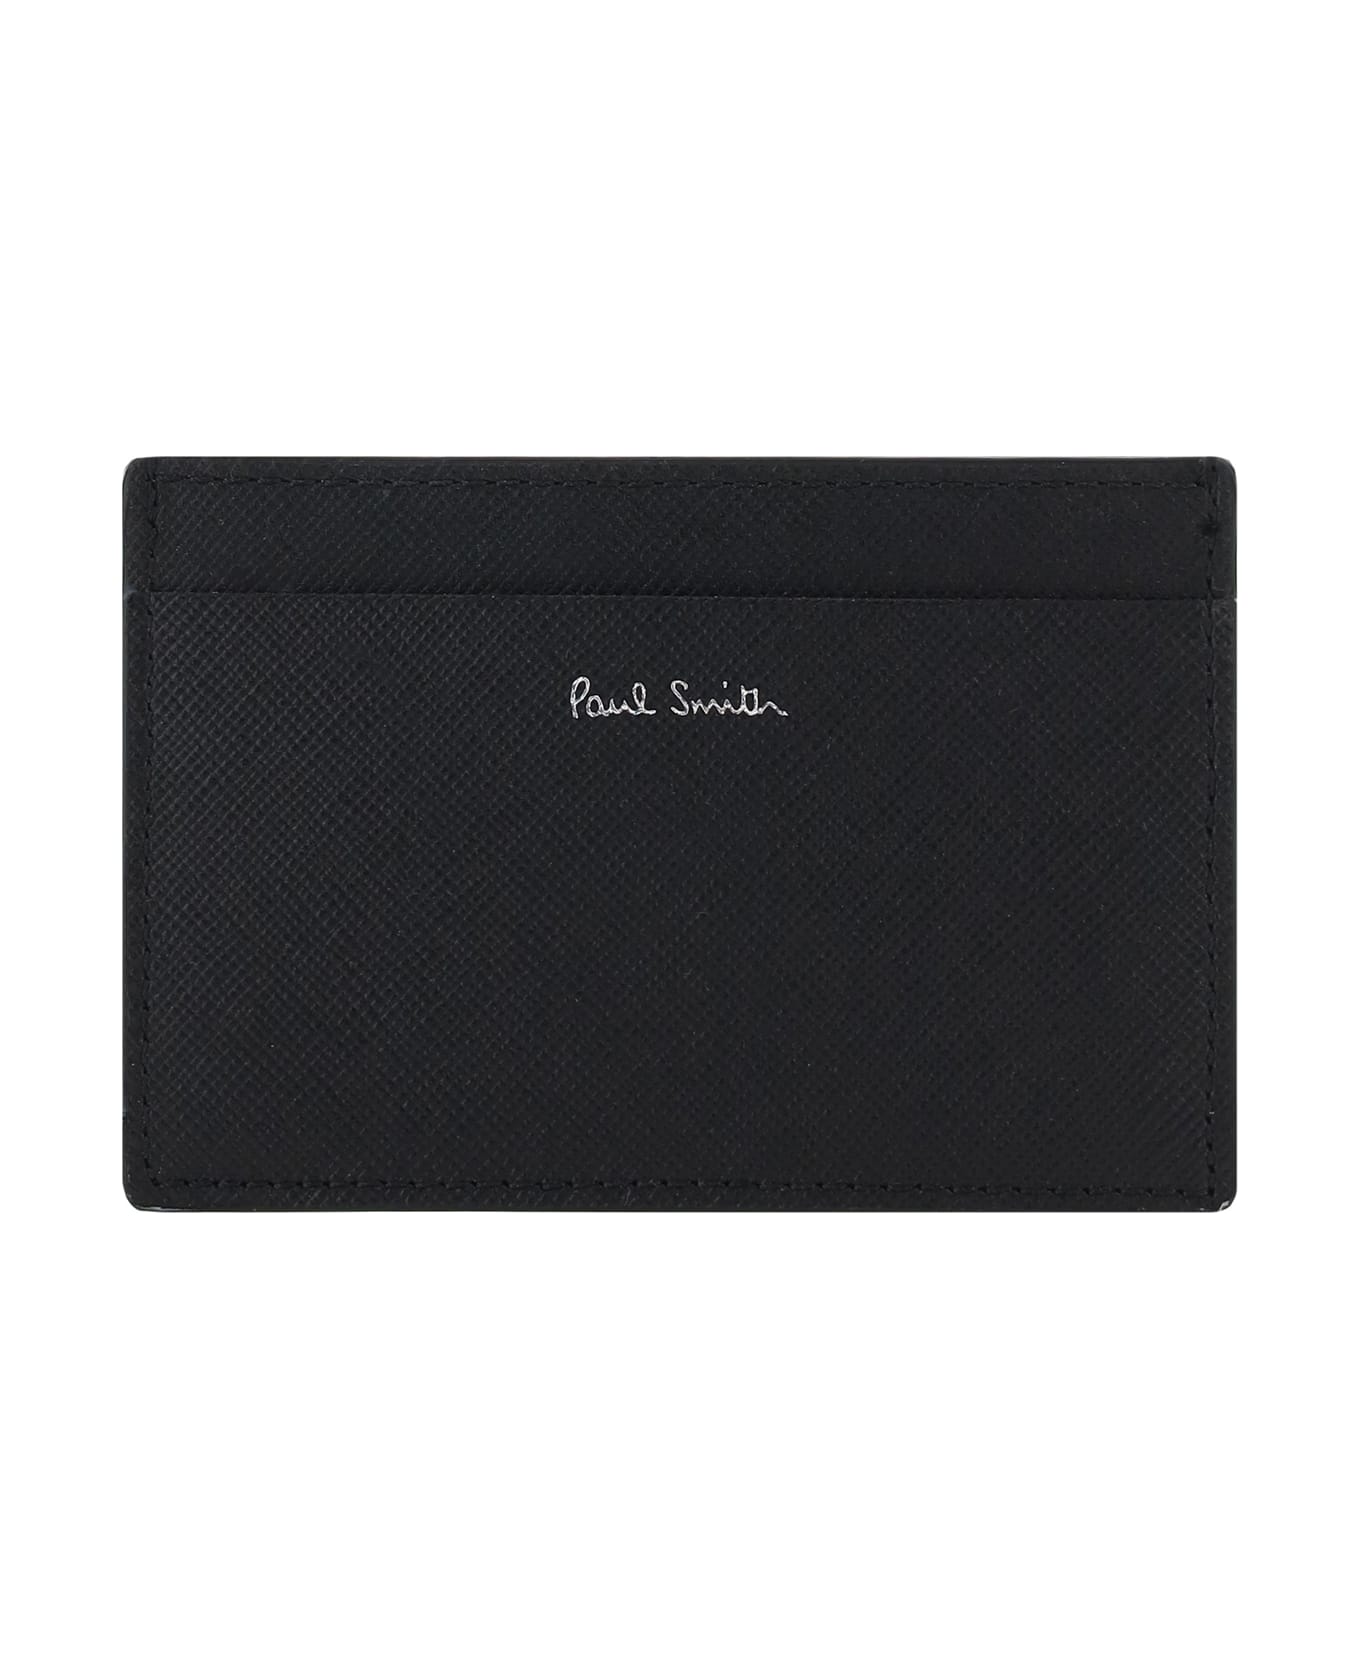 Paul Smith Card Holder - BLACK/BLUE 財布